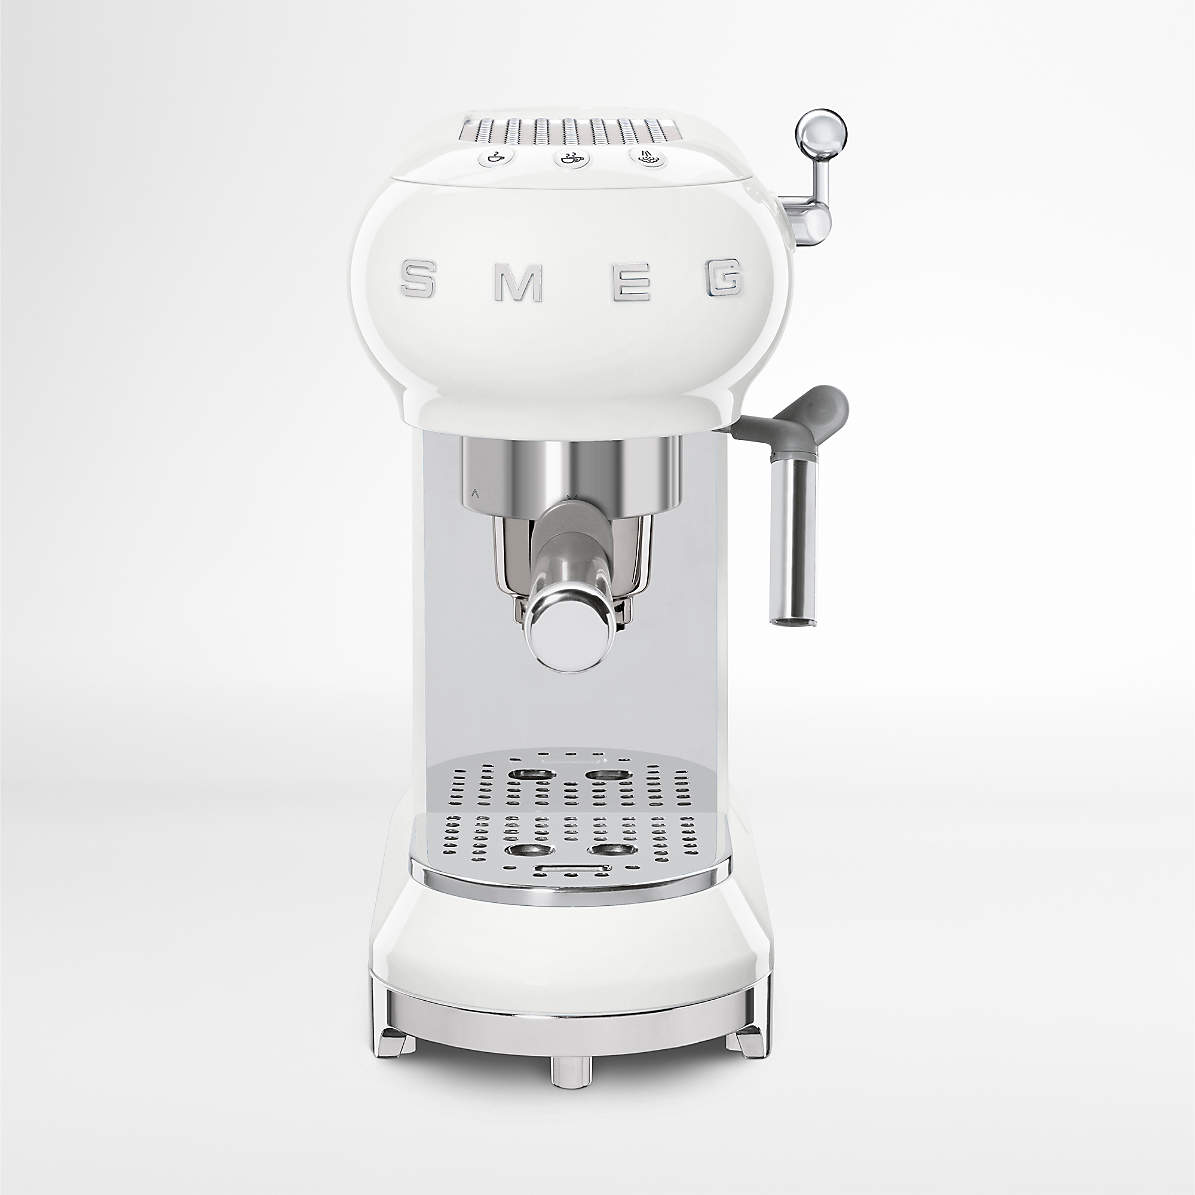 Smeg Espresso Machine - White